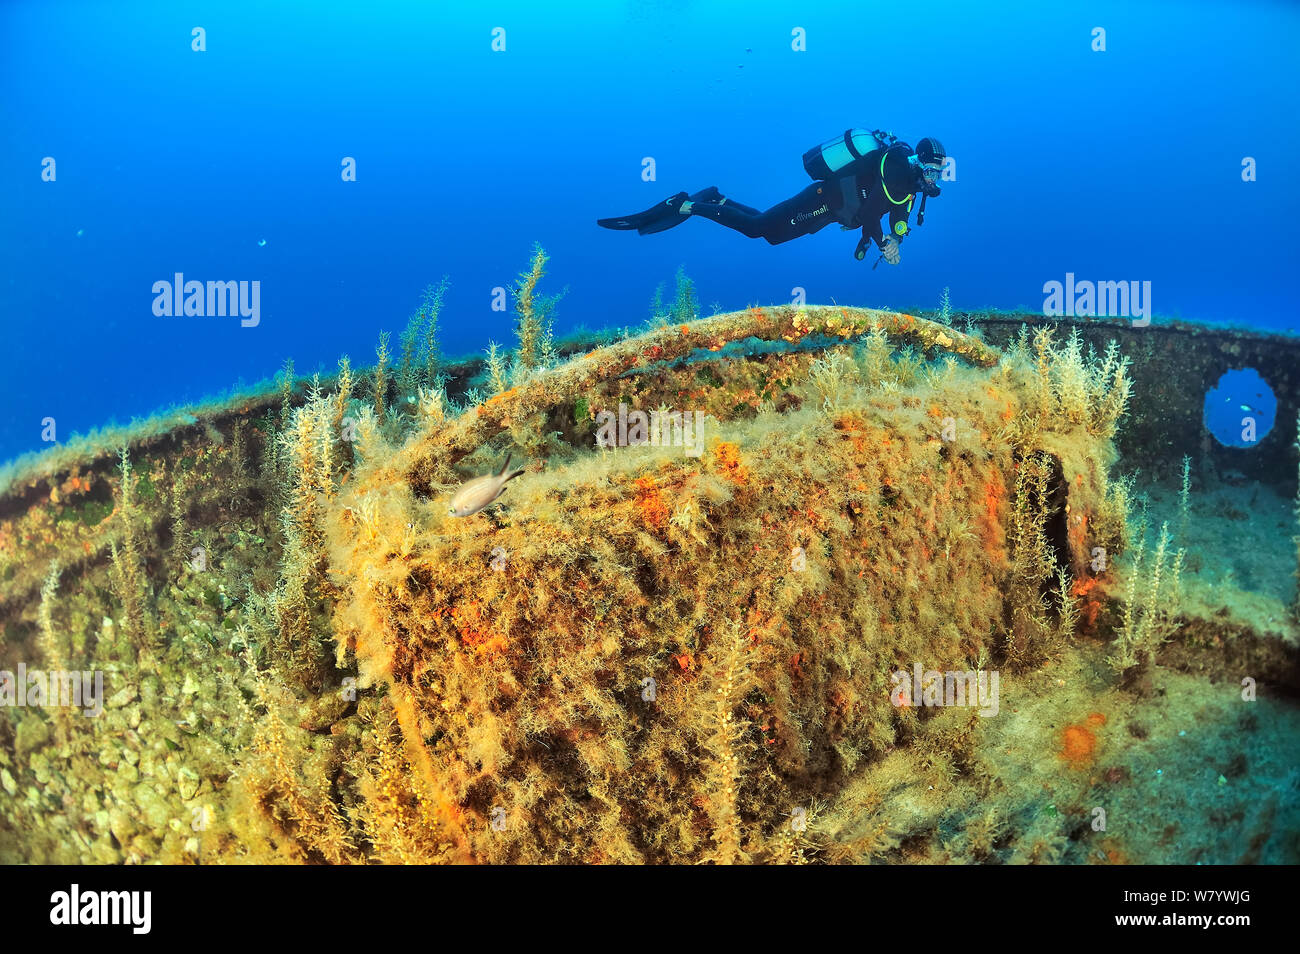 Diver diving the wreck of the tug boat Rozi scuttled in 1992 off Cirkewwa, Malta, Mediterranean Sea. June 2014. Stock Photo